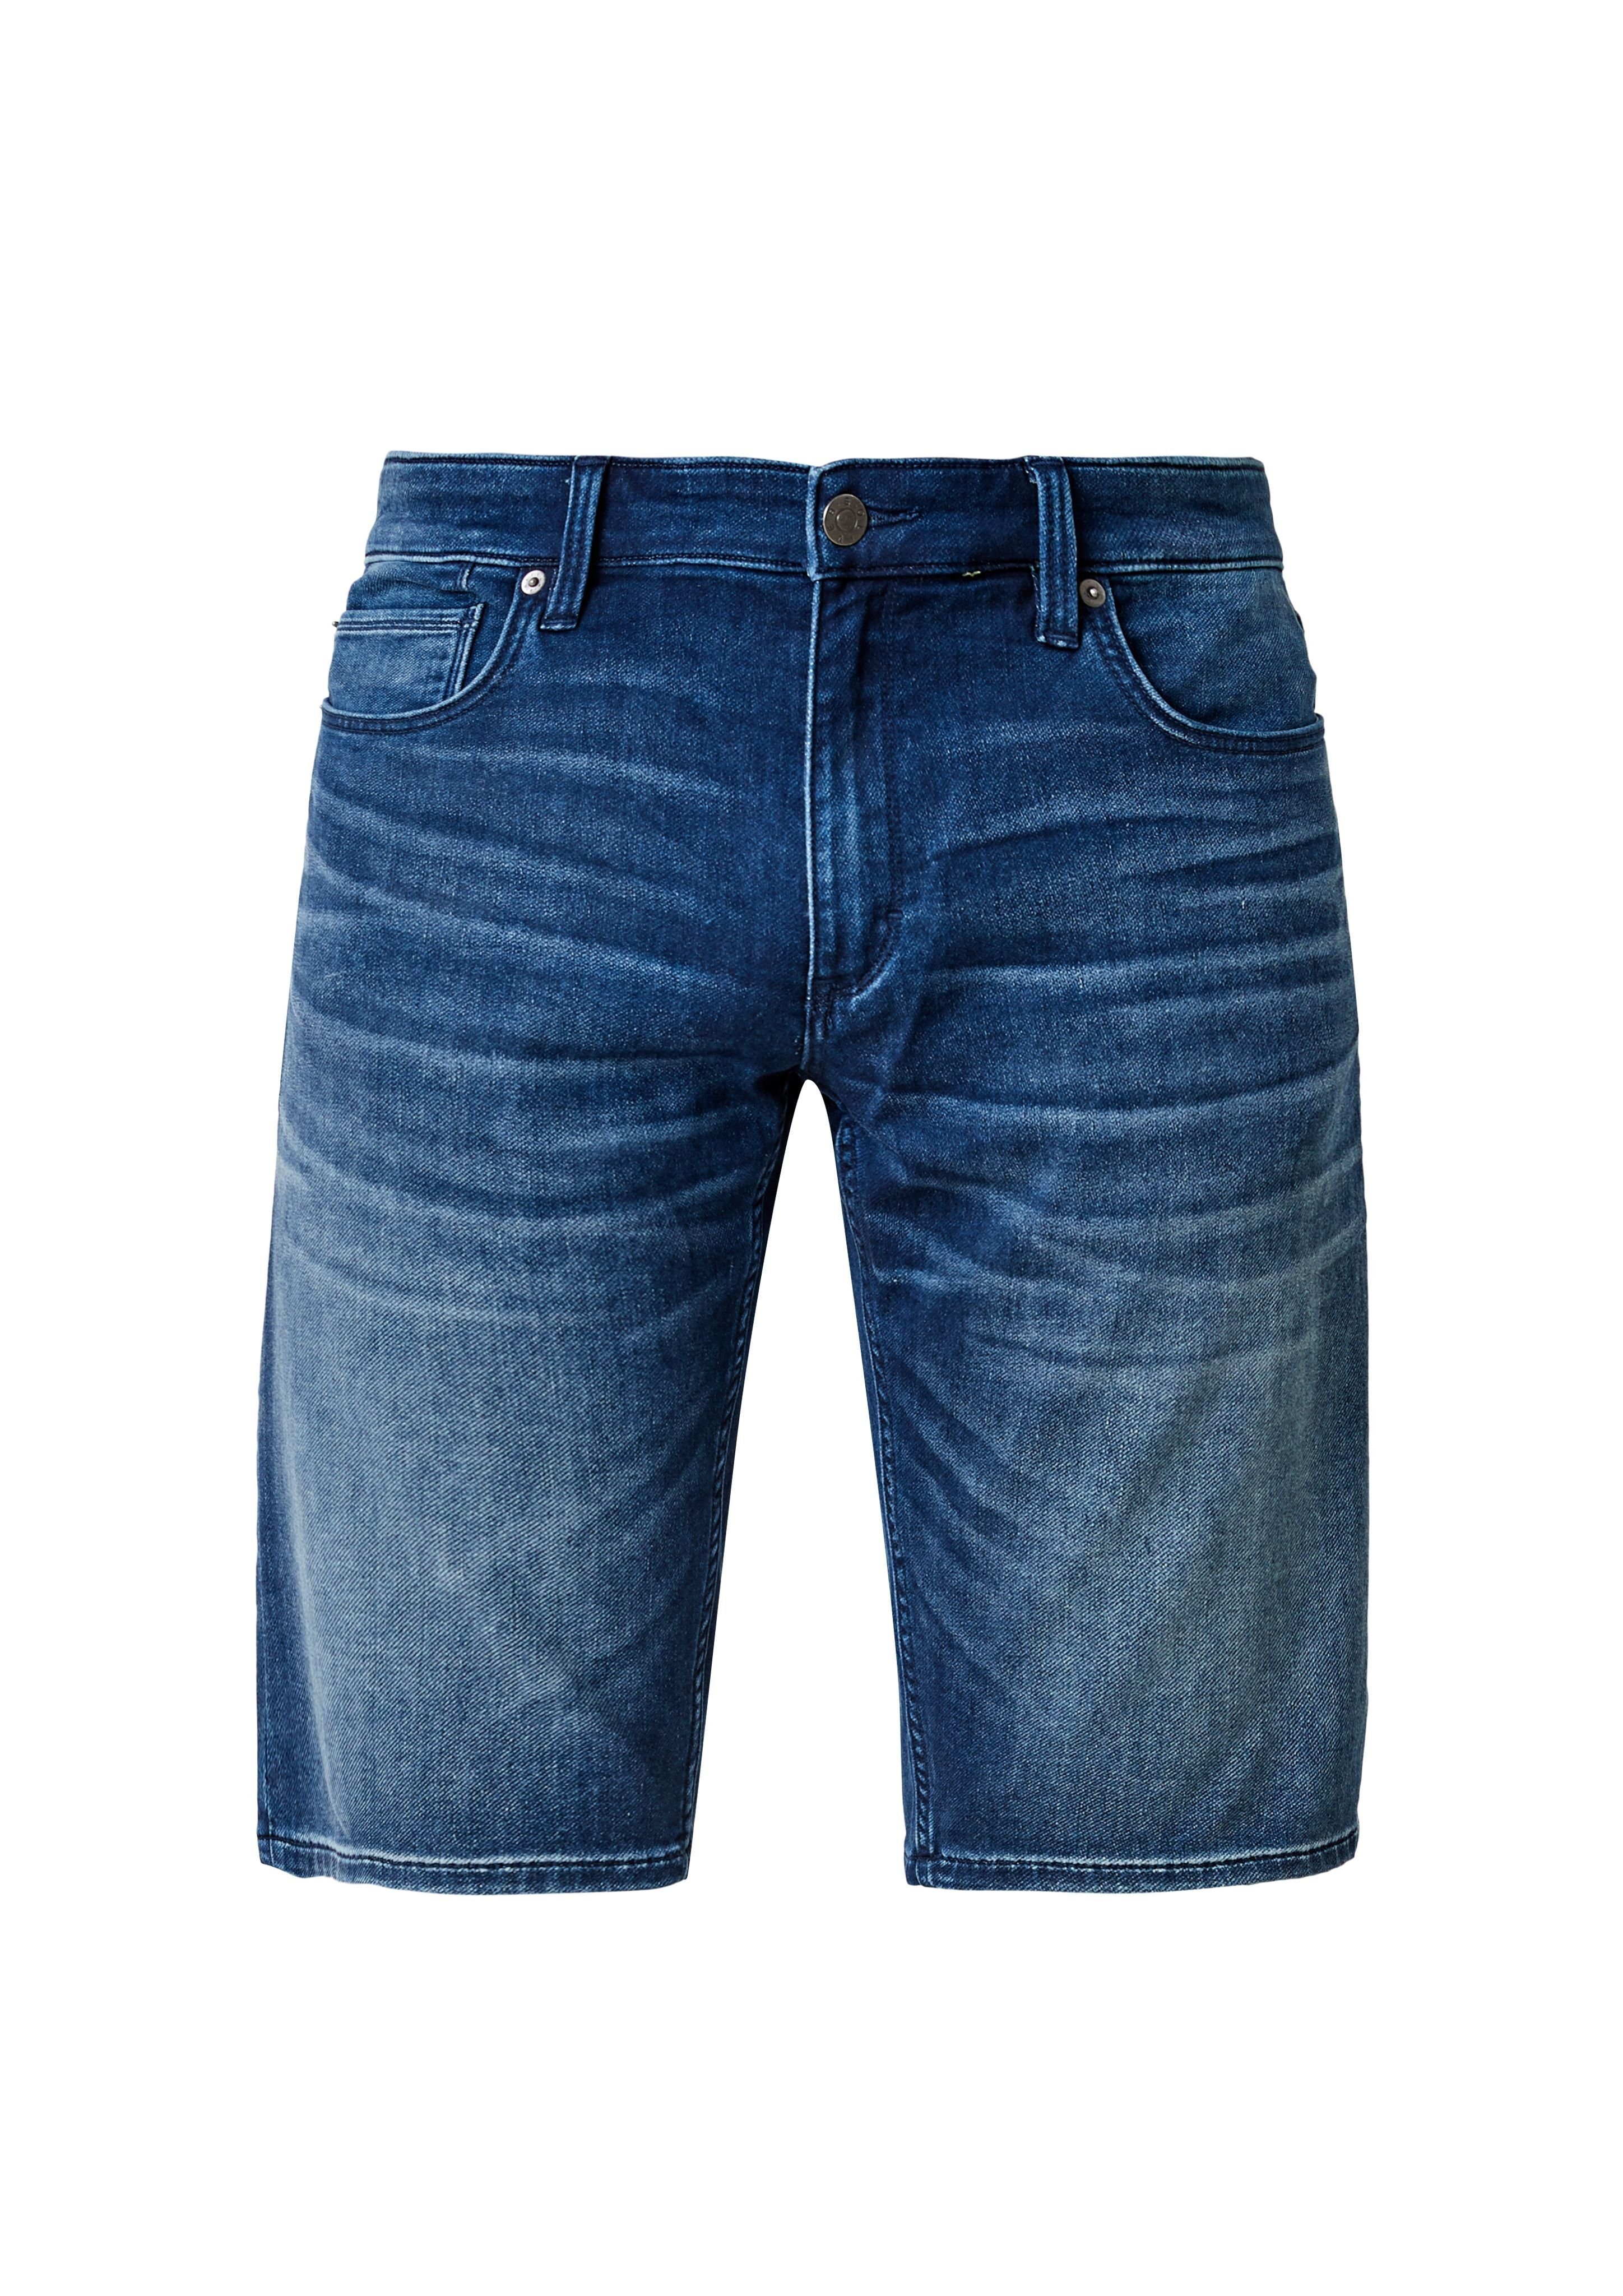 s.Oliver Shorts - Jeans-Short - Bermuda Shorts